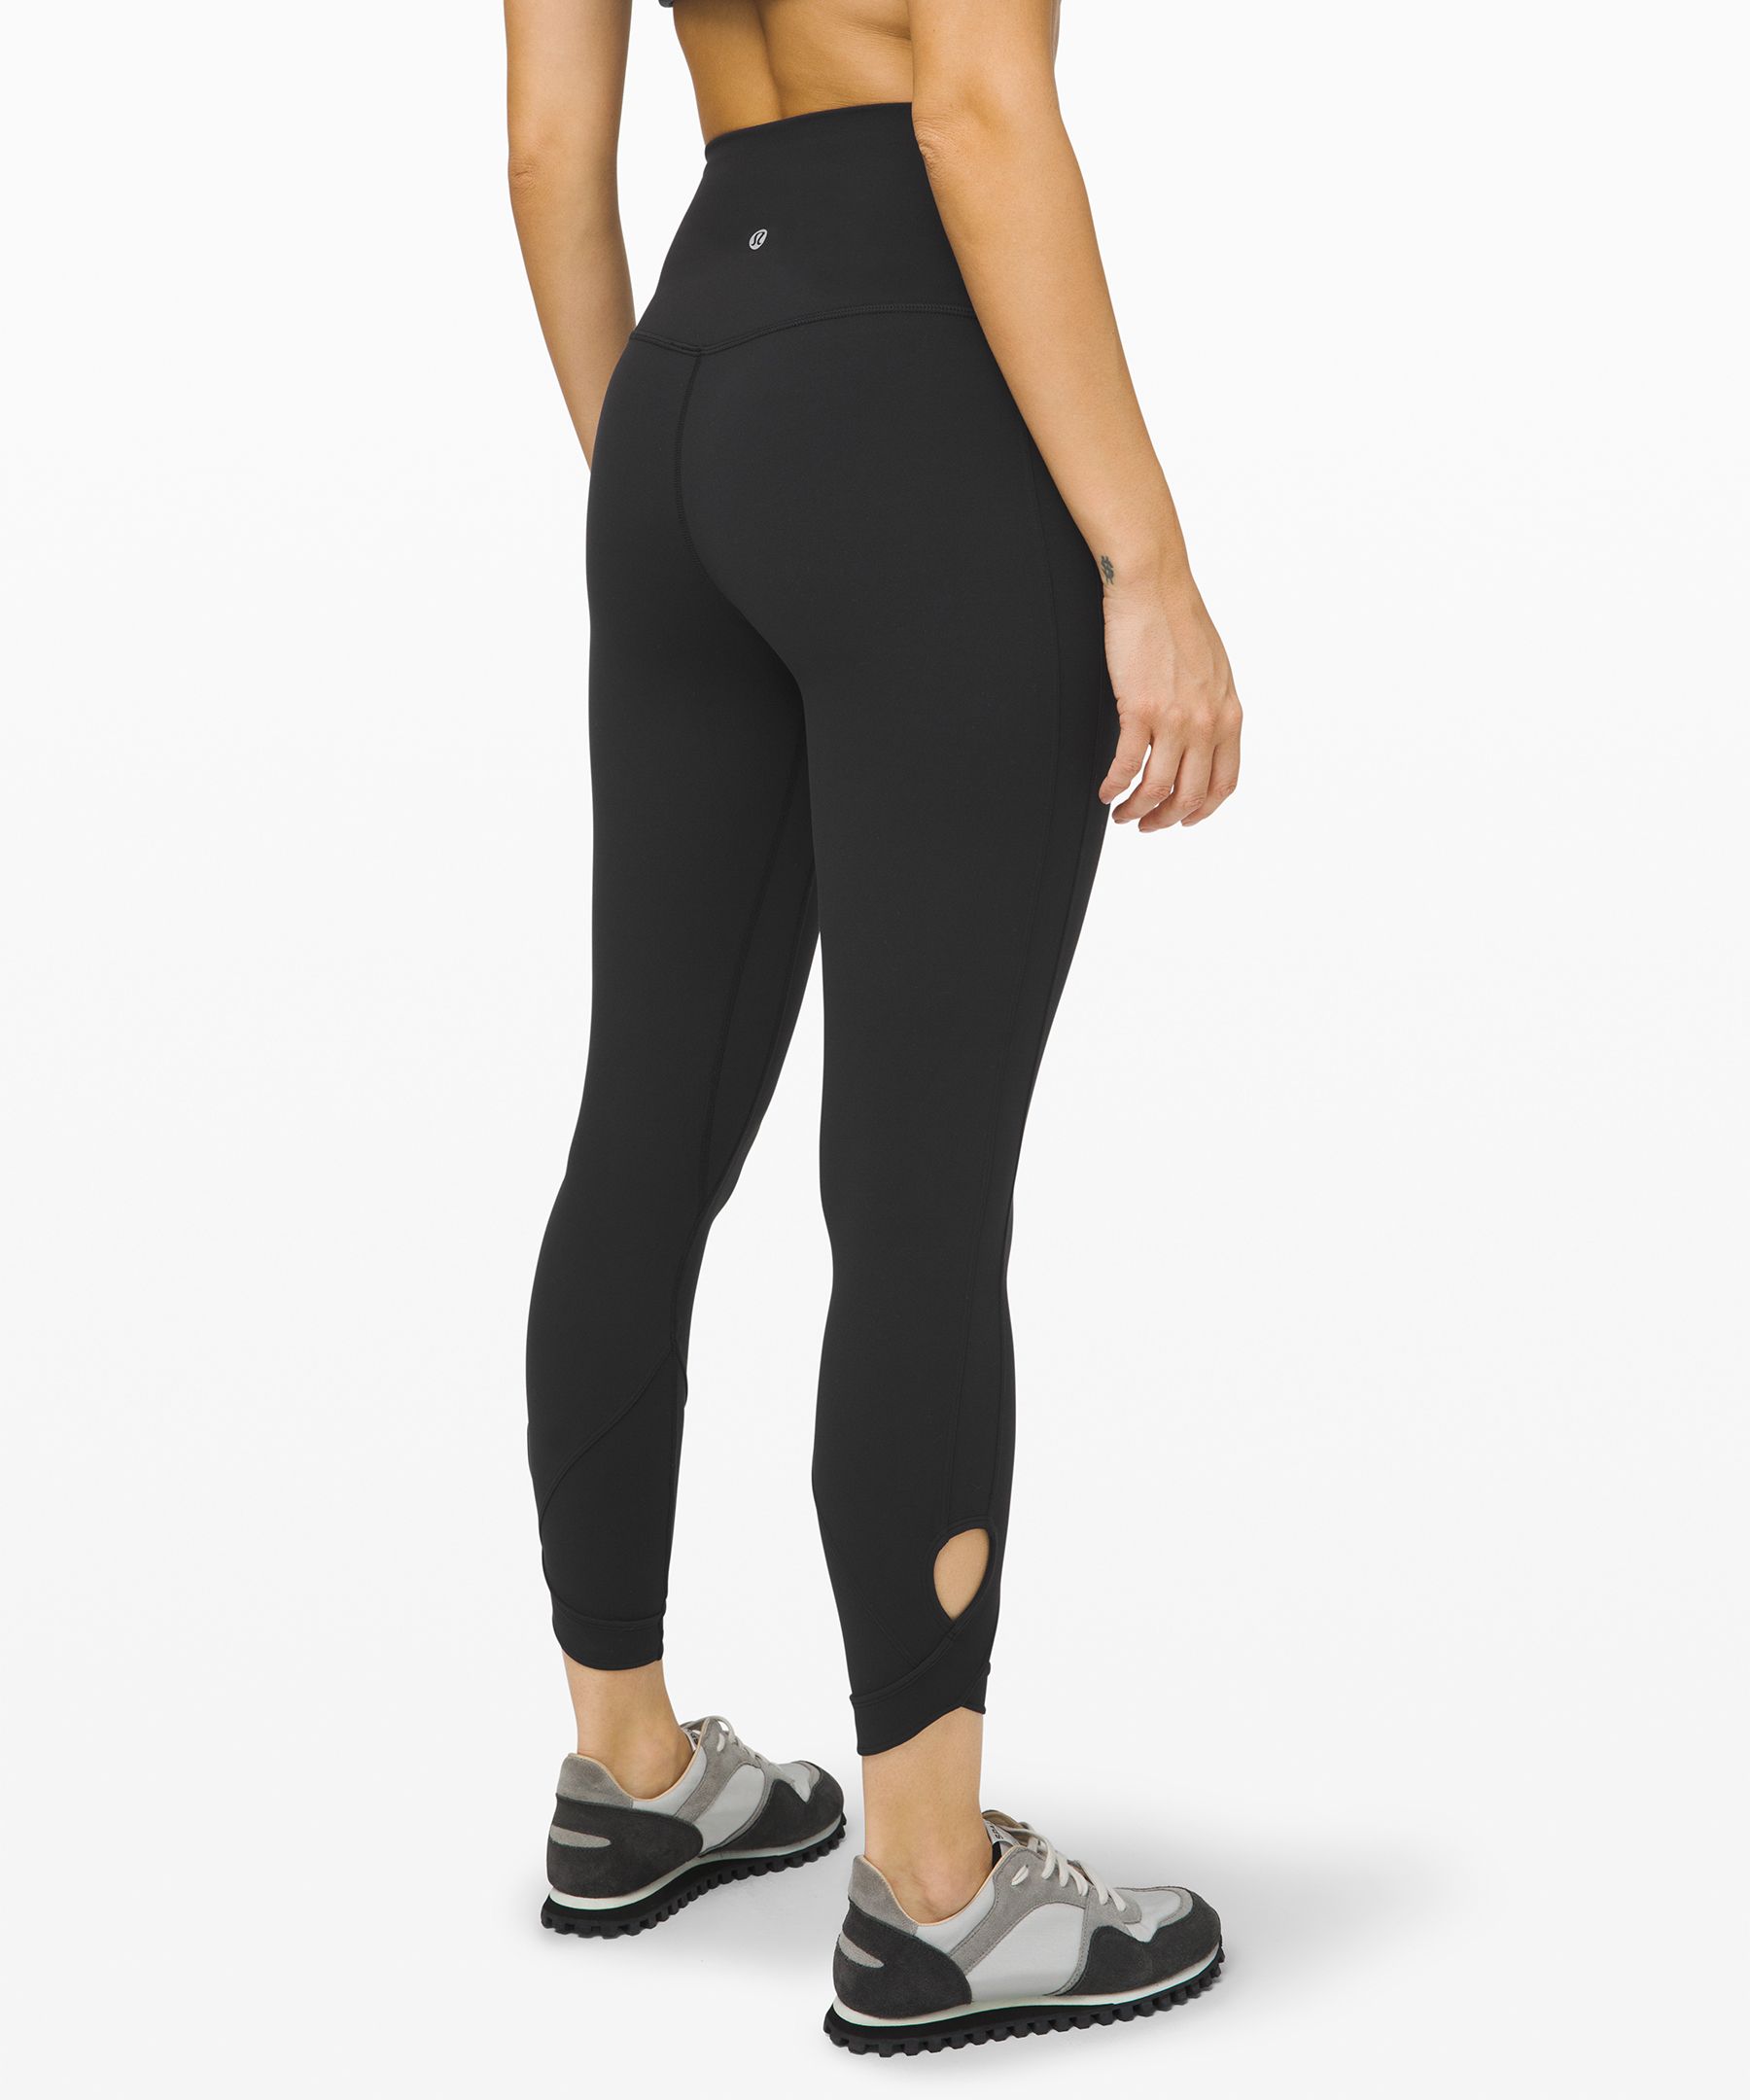 Lululemon Athletica Polka Dots Black Active Pants Size 8 - 56% off